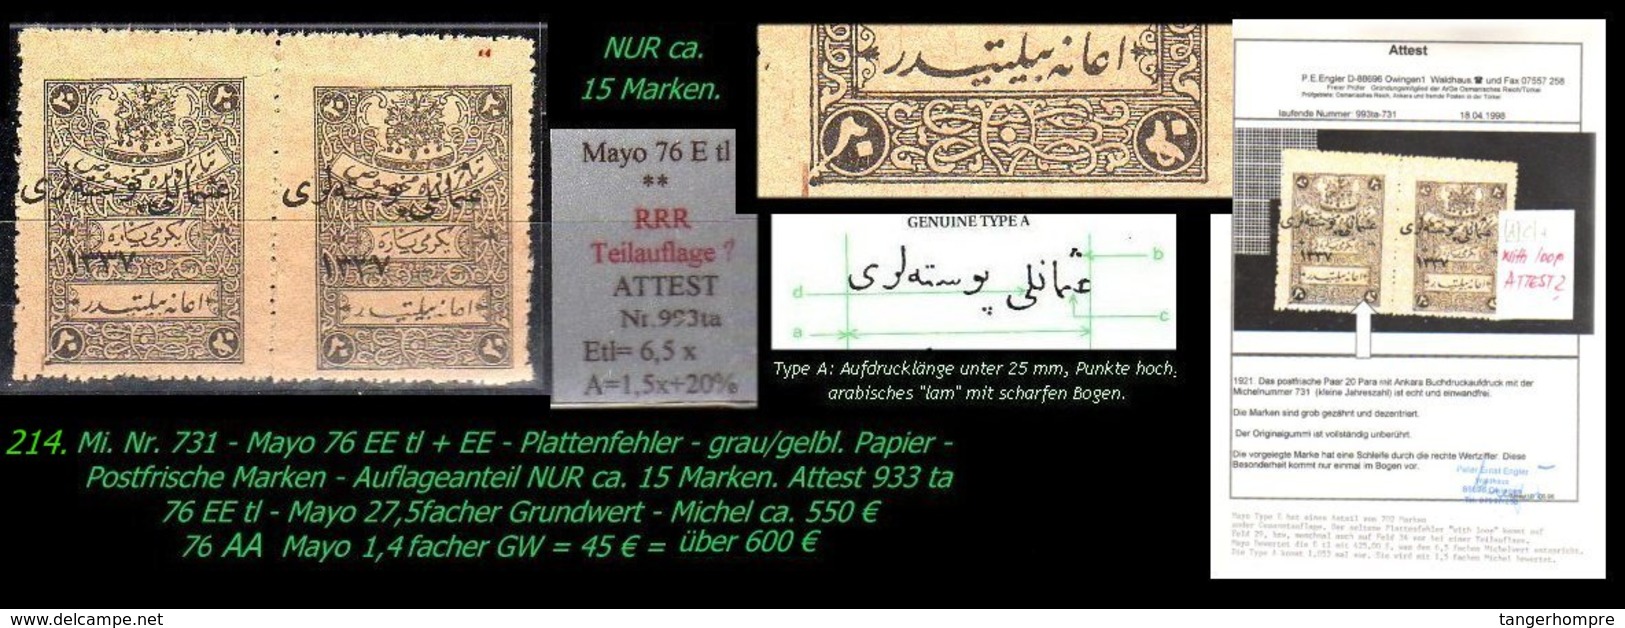 EARLY OTTOMAN SPECIALIZED FOR SPECIALIST, SEE...Mi. Nr. 731 - Mayo 75 EEtl - Auflagenanteil 13 Stück -RRR- Attest - 1920-21 Anatolia